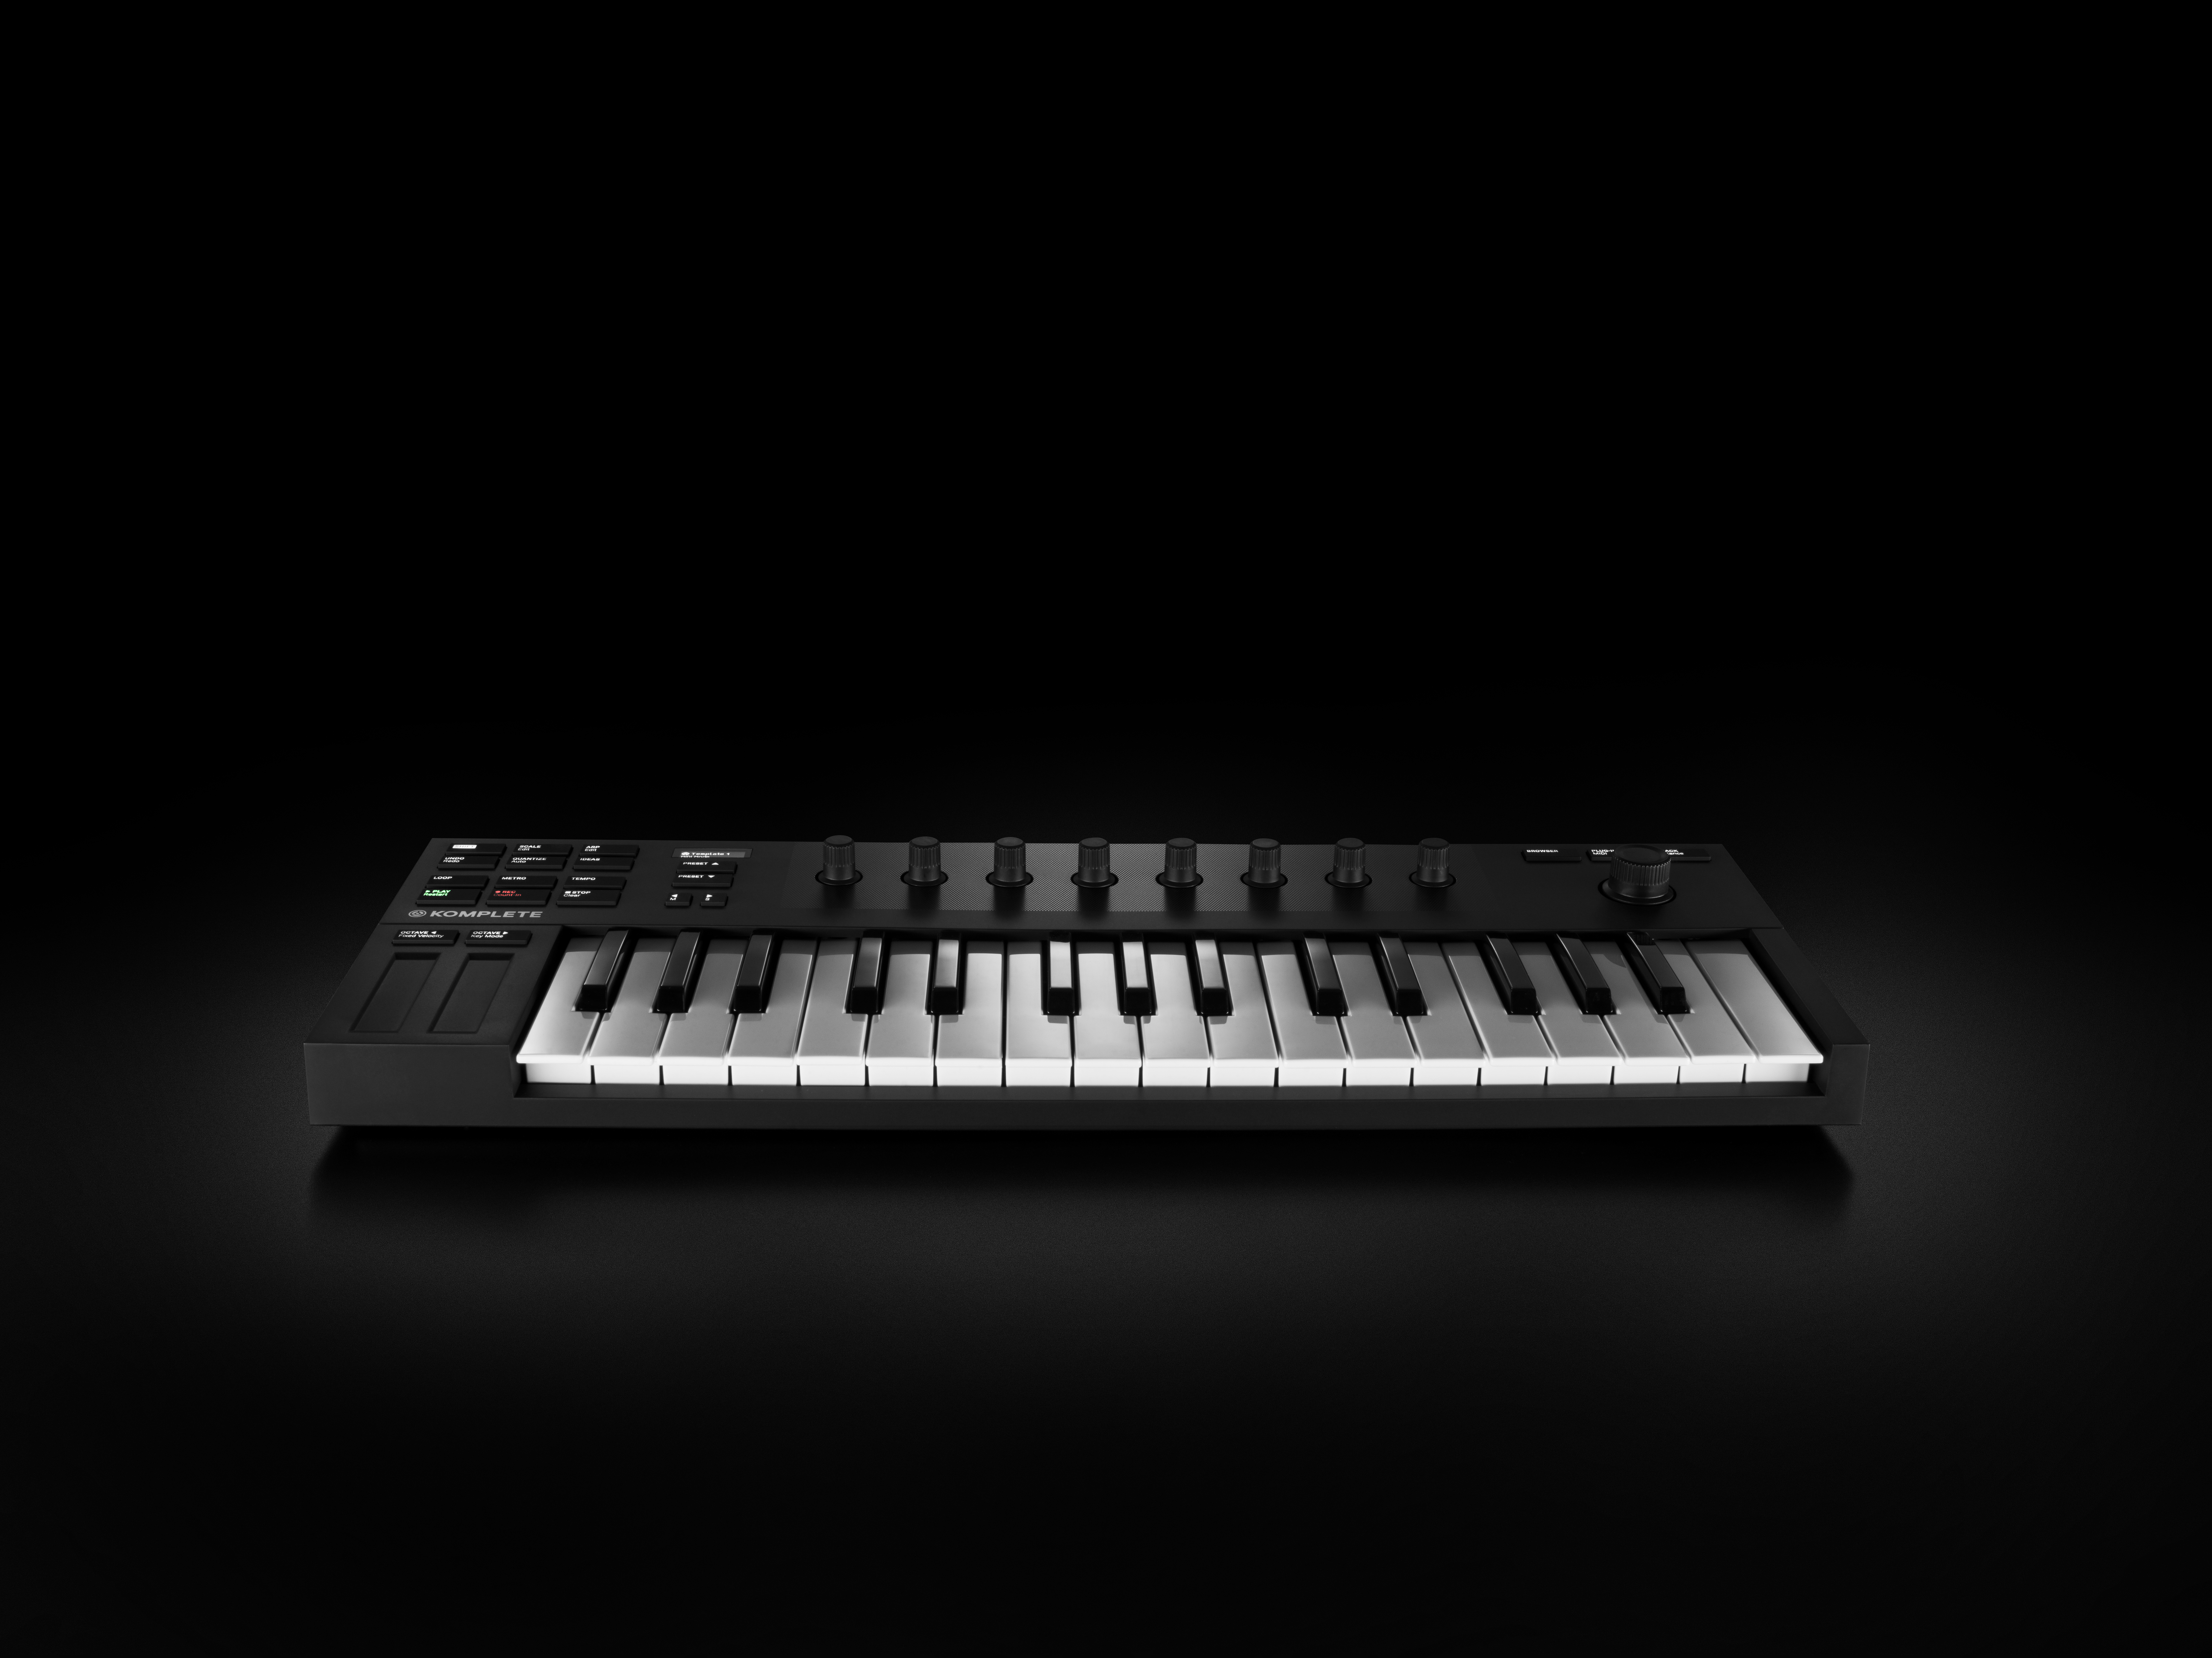 native instruments keyboard m32